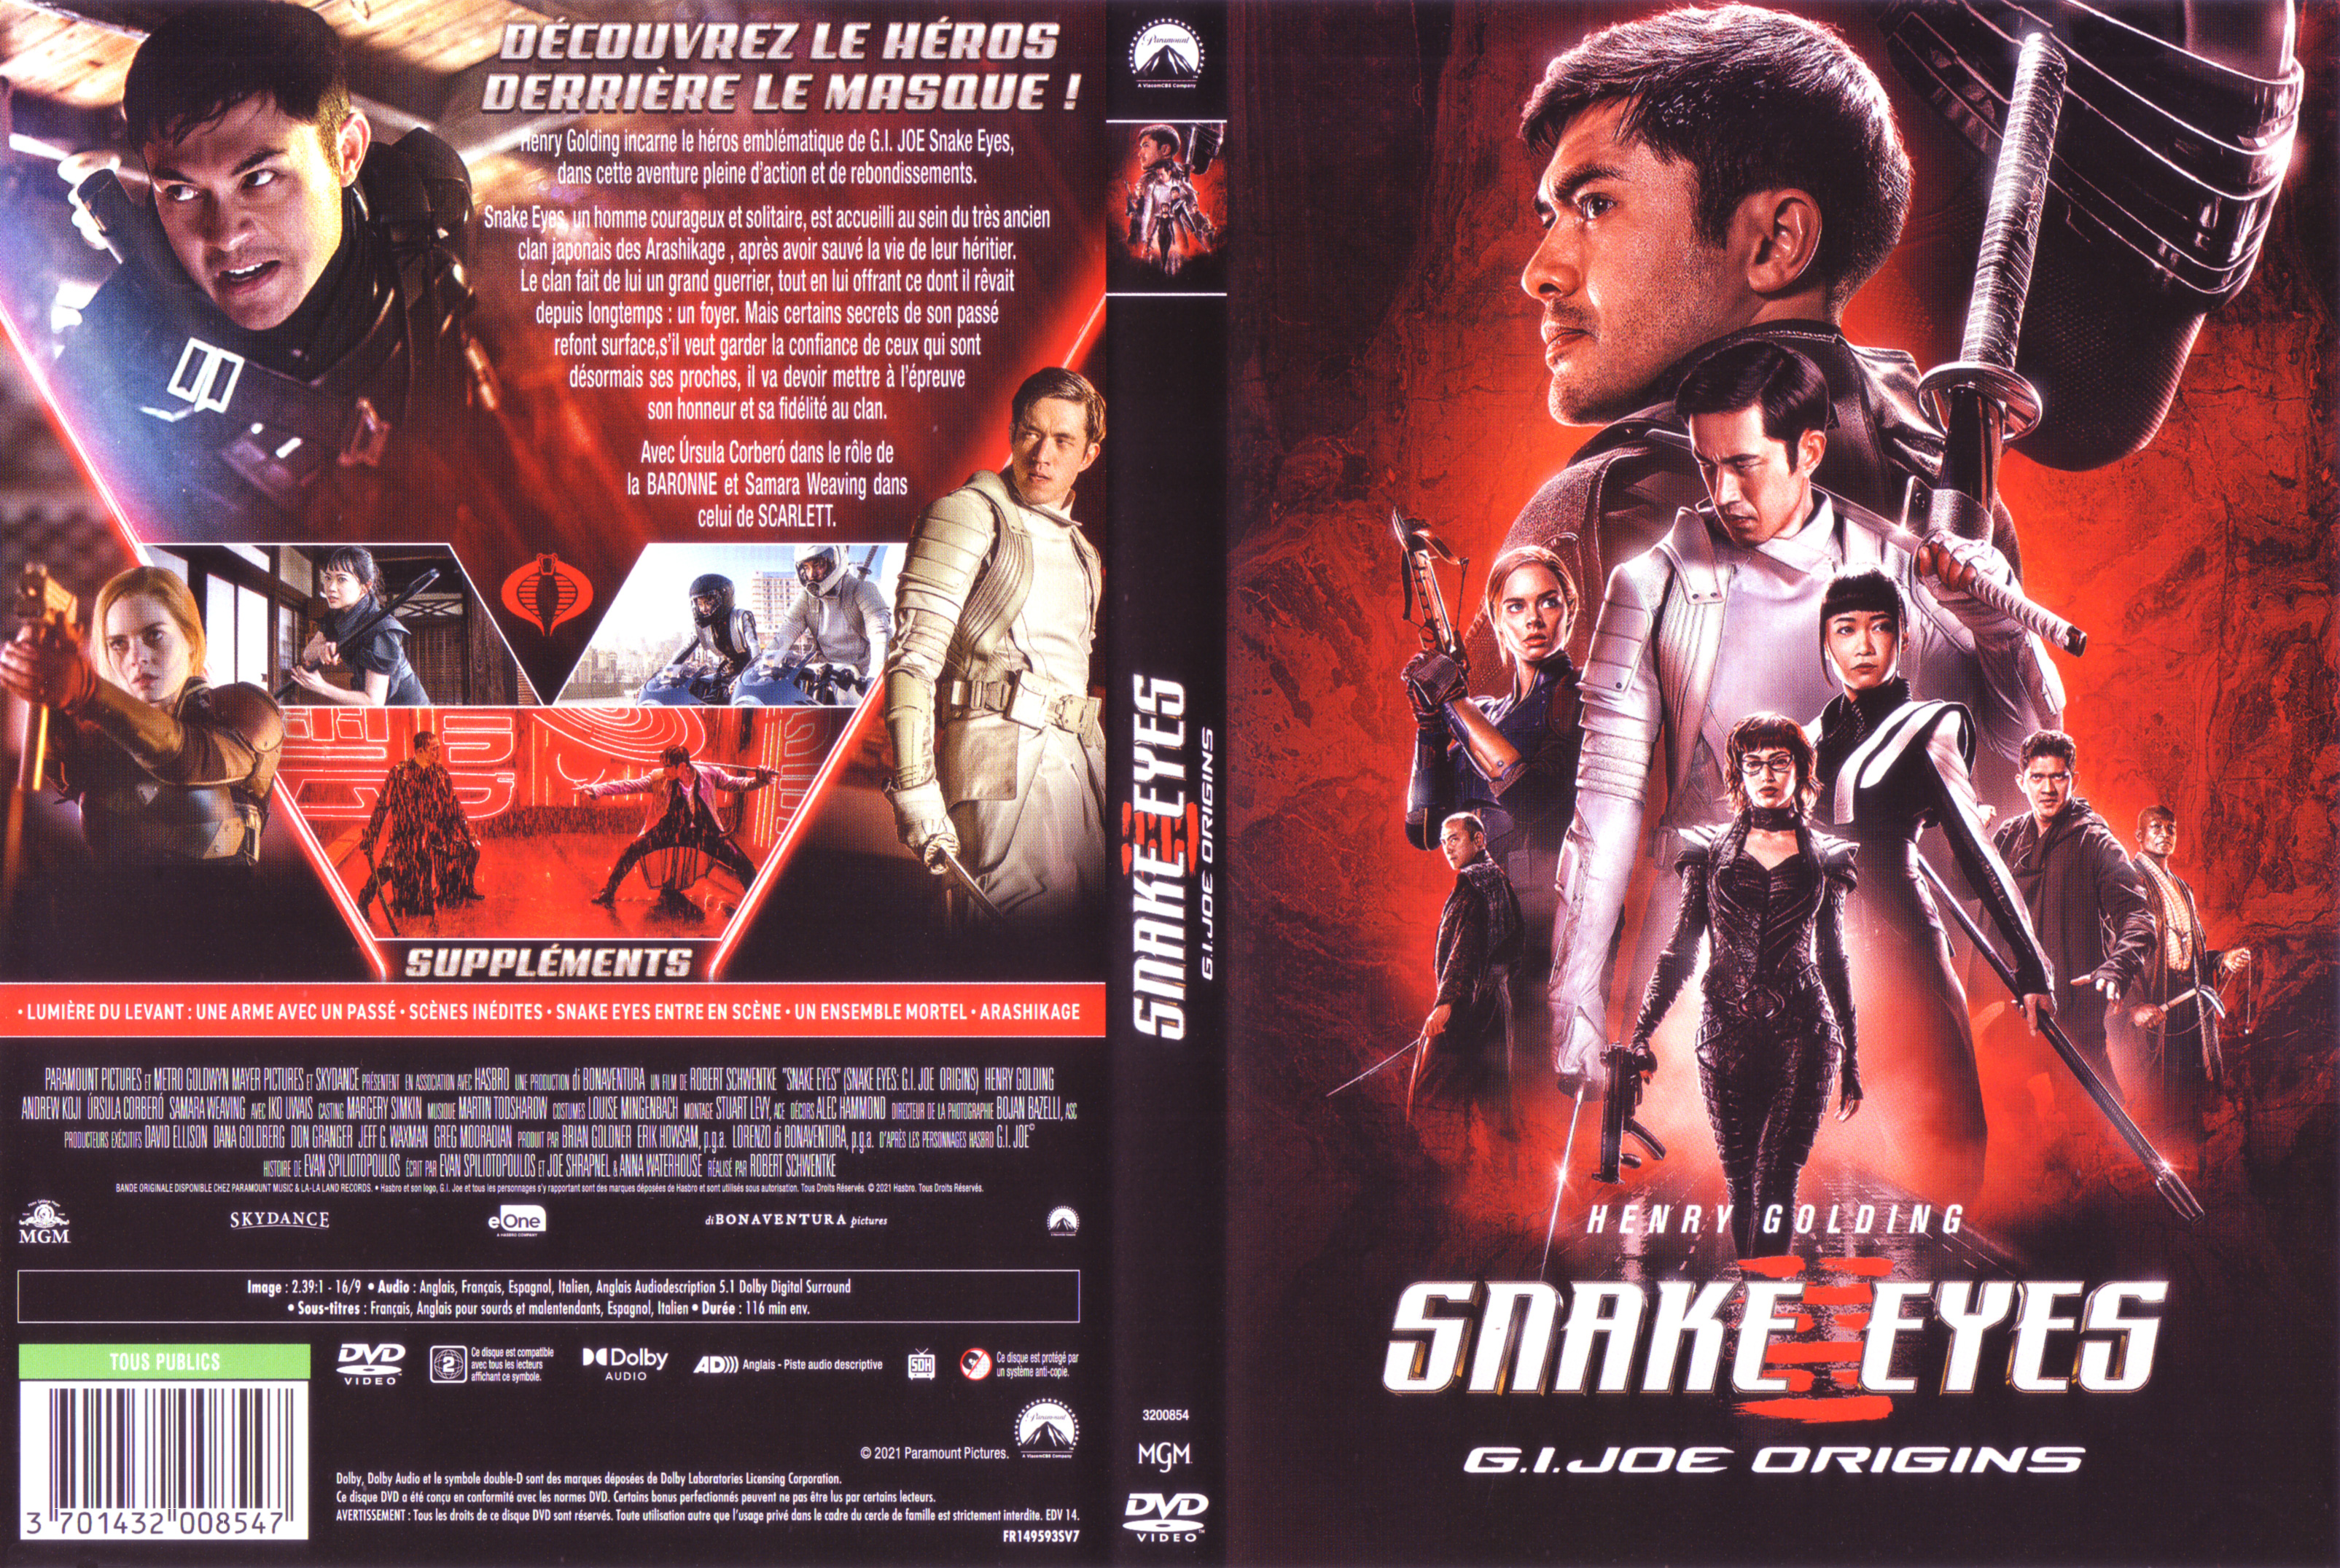 Jaquette DVD Snake Eyes GI Joe Origins